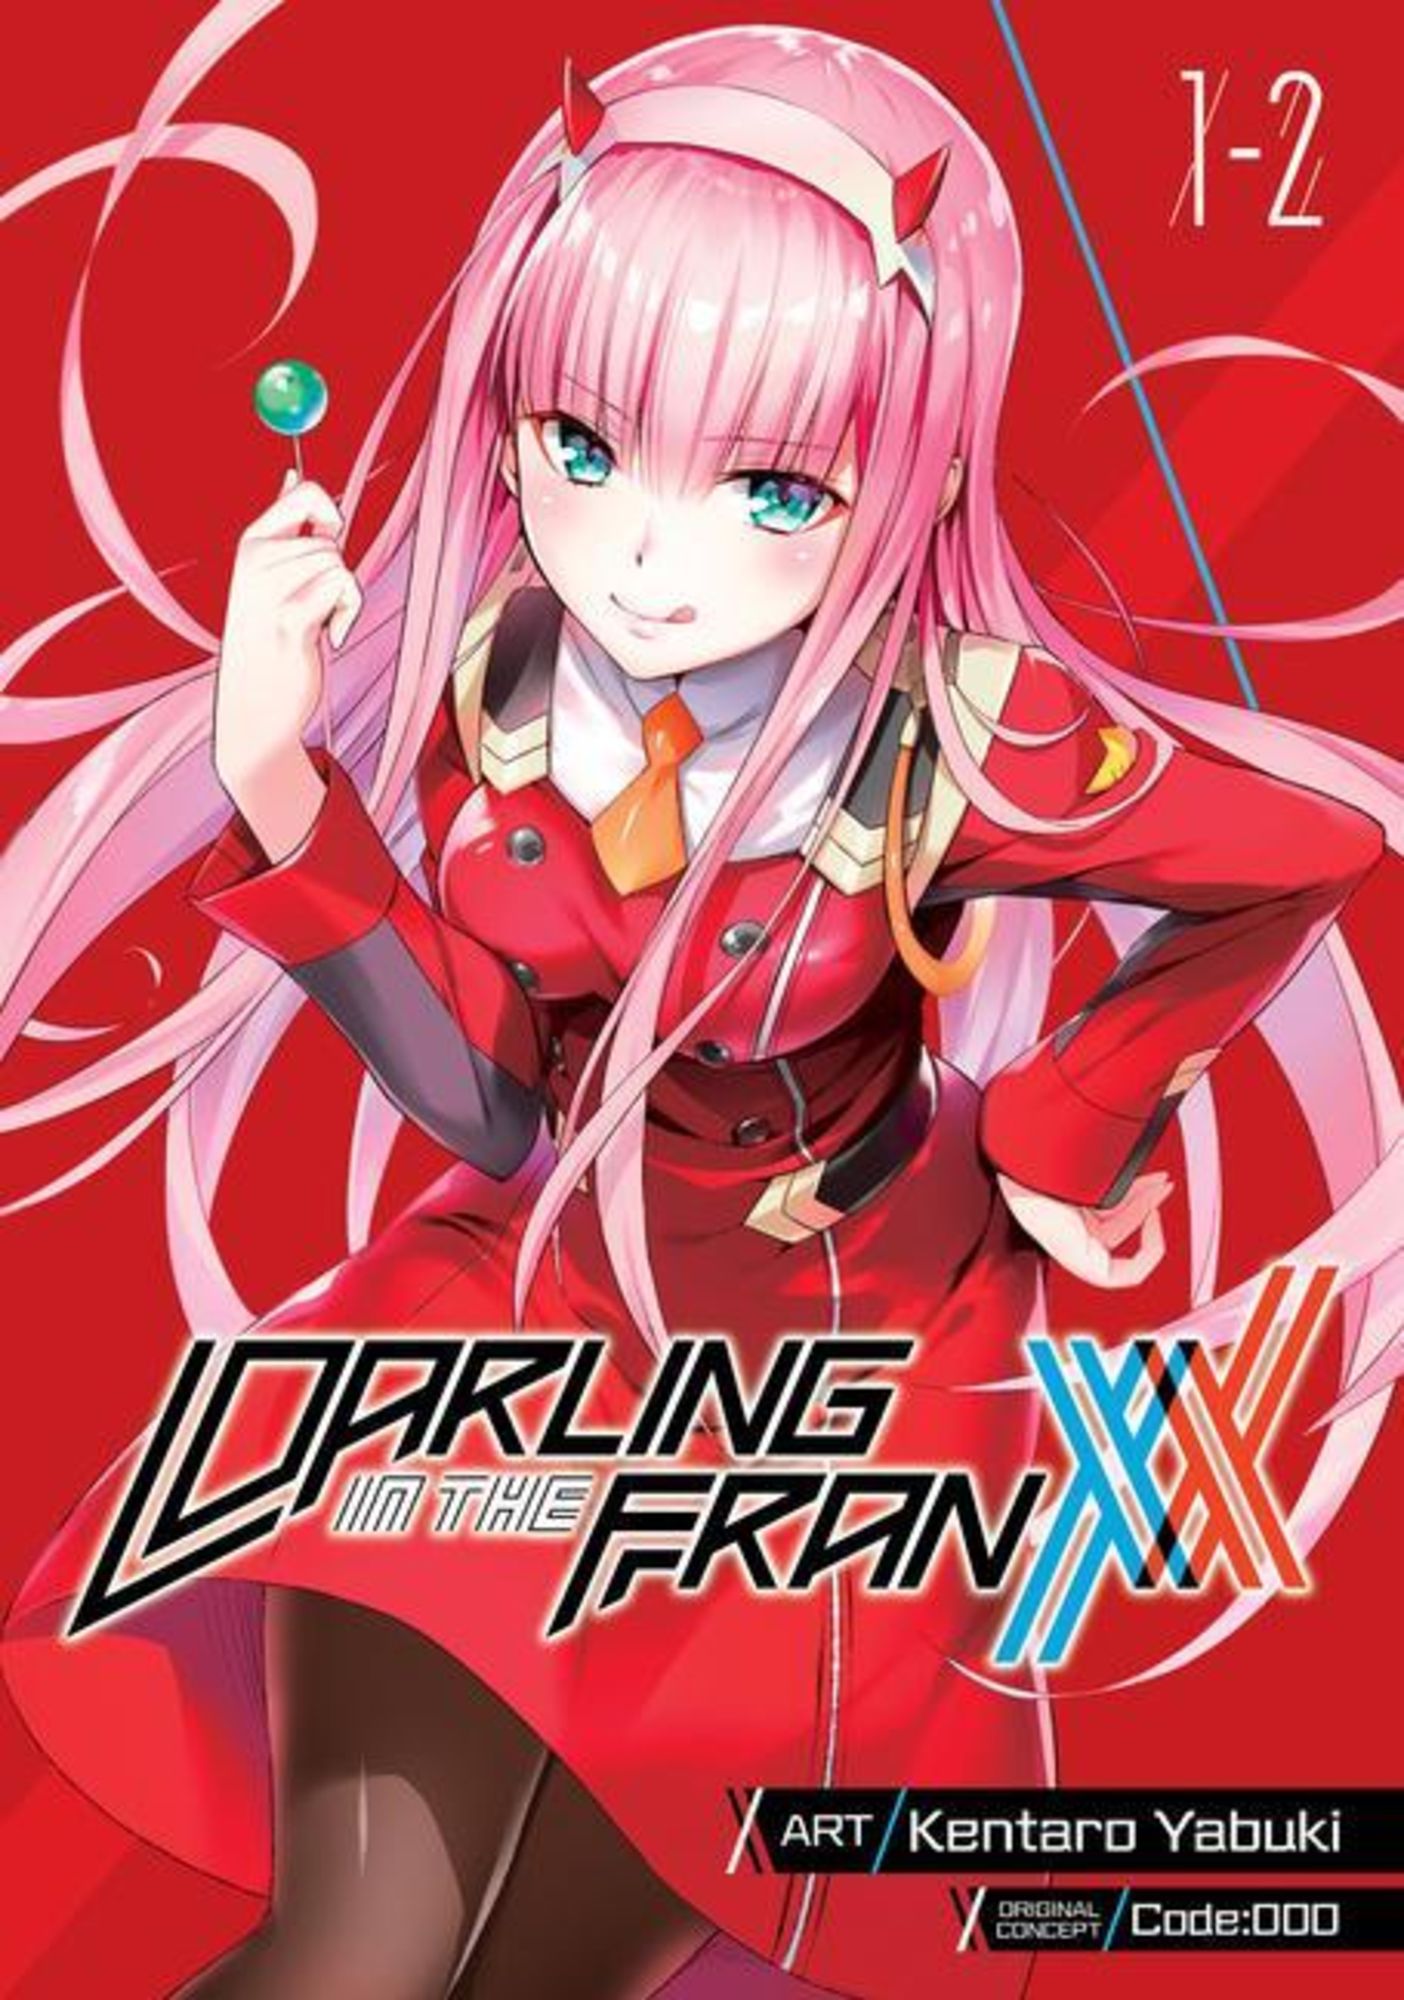 Darling in the franxx manga deutsch